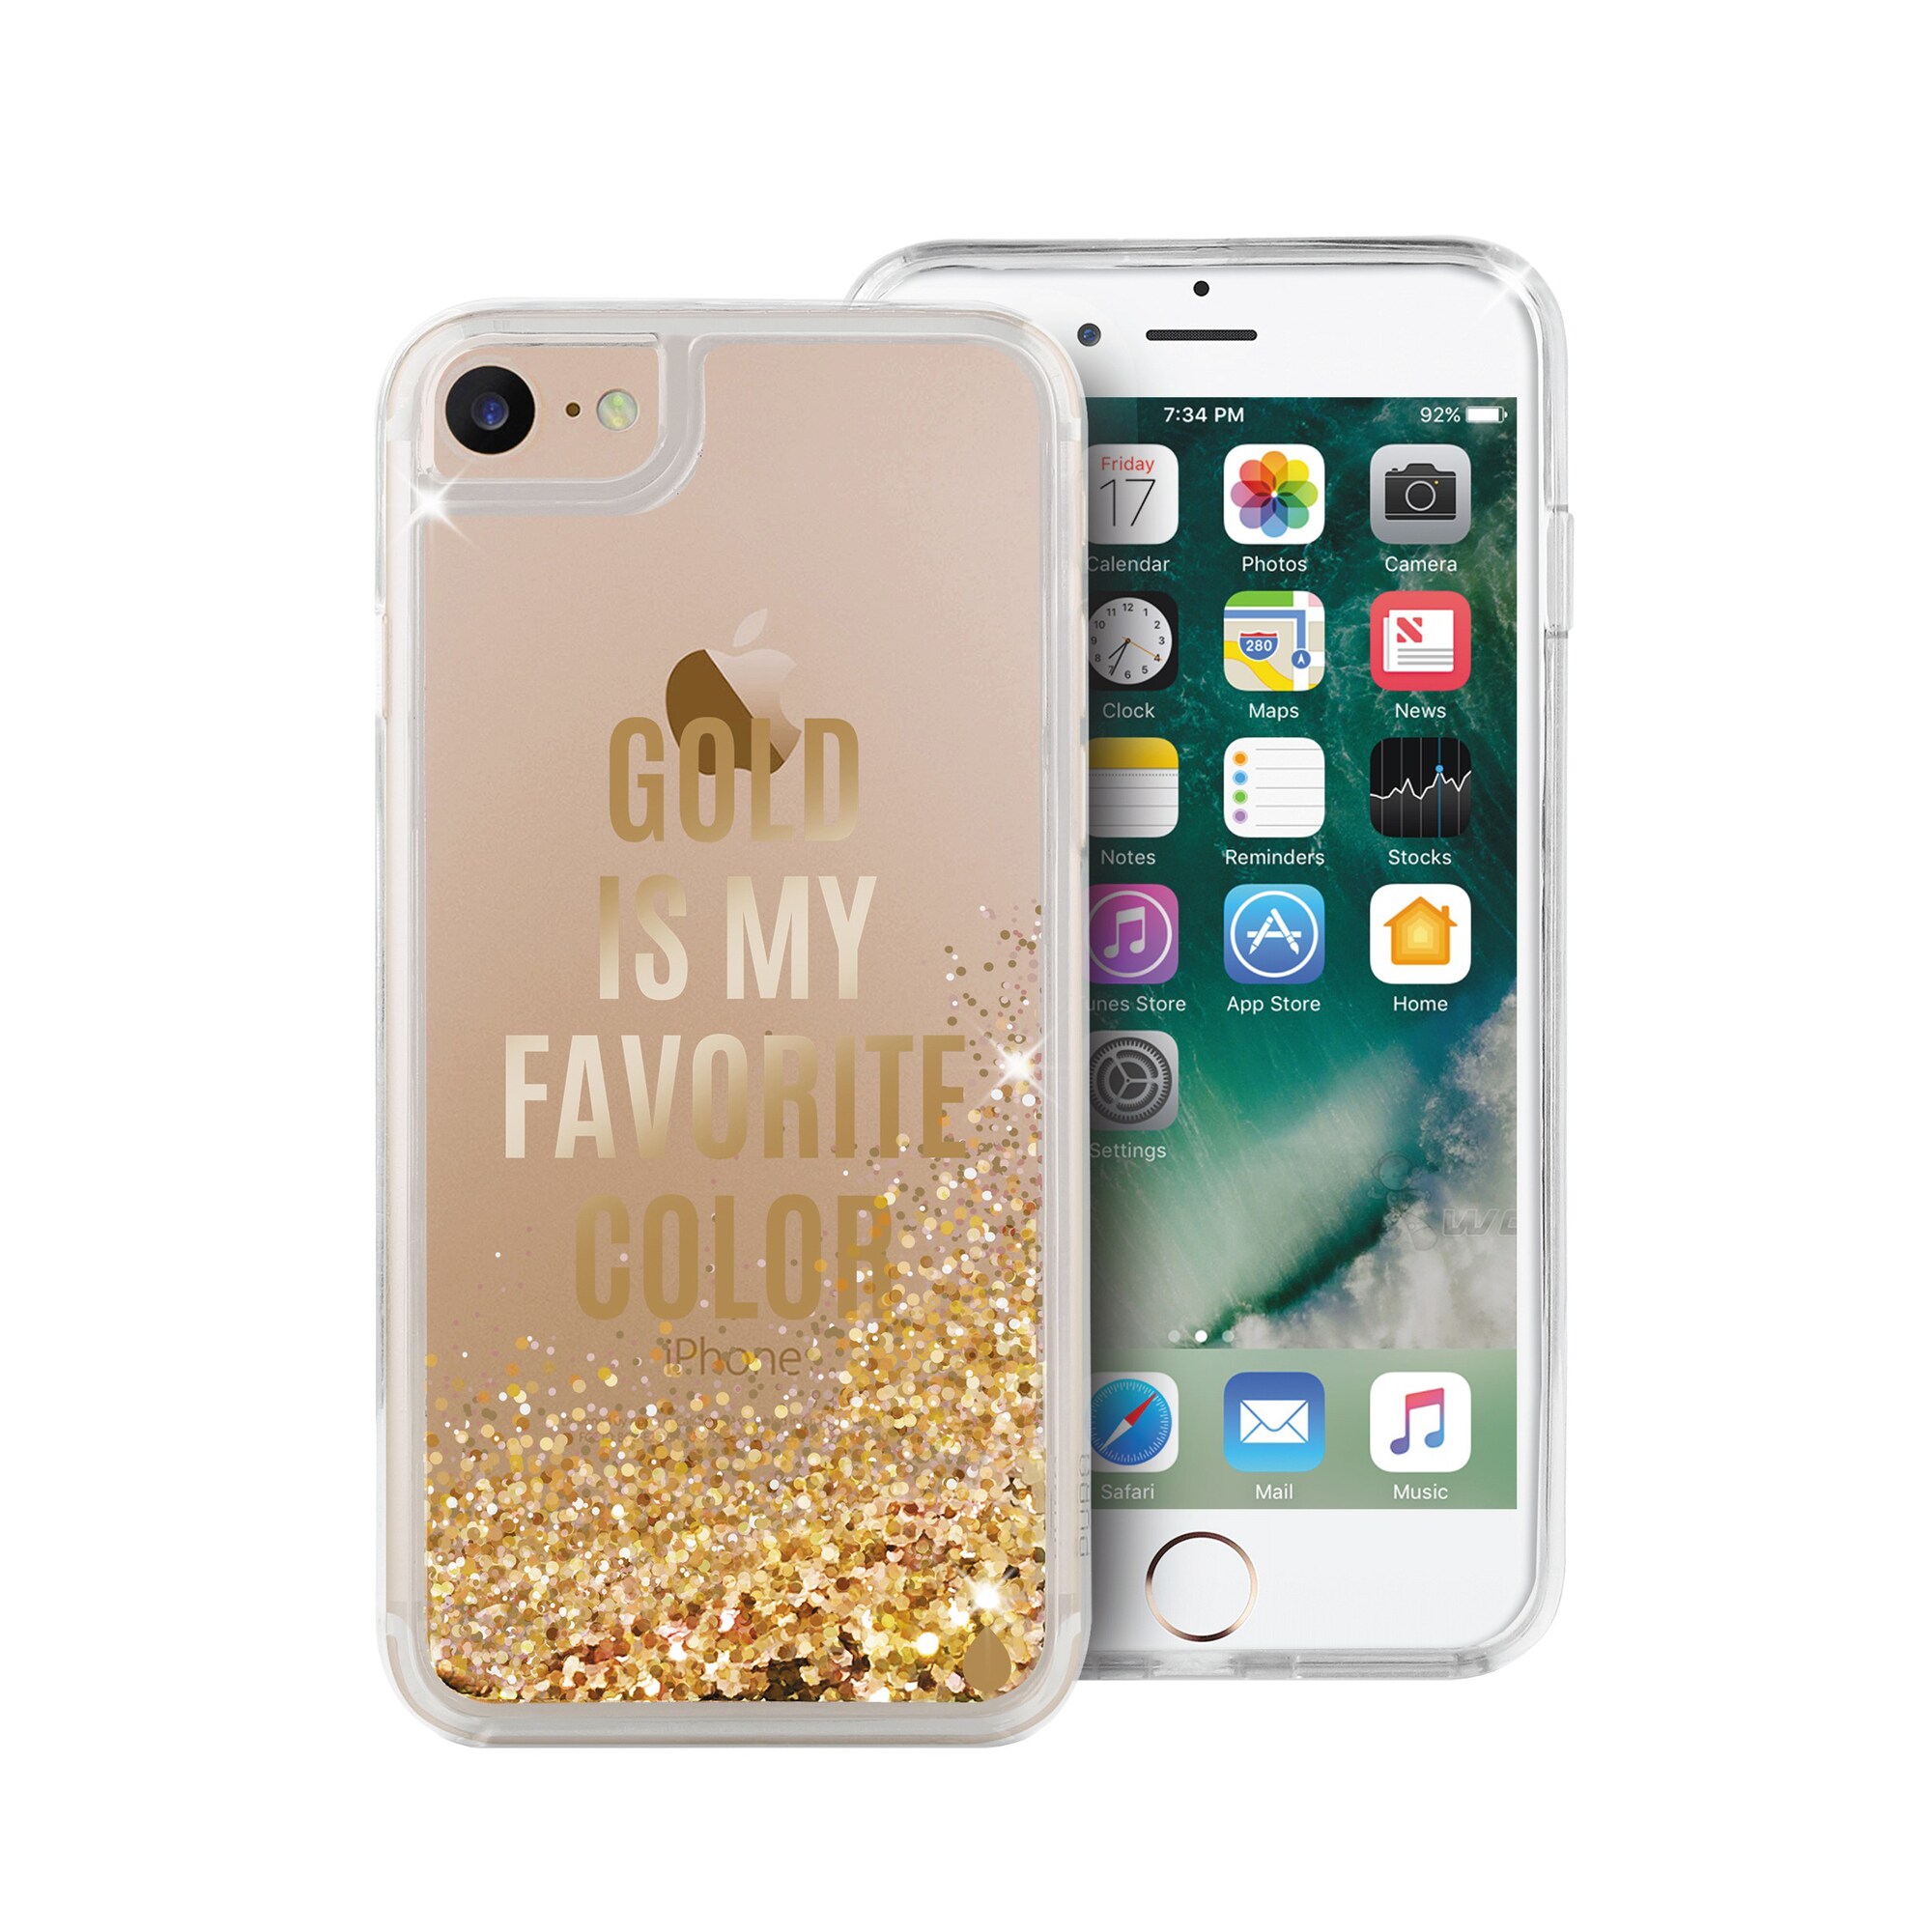 Puro iPhone 6/6s/7 Aqua fodral (guld) - Skal och Fodral - Elgiganten